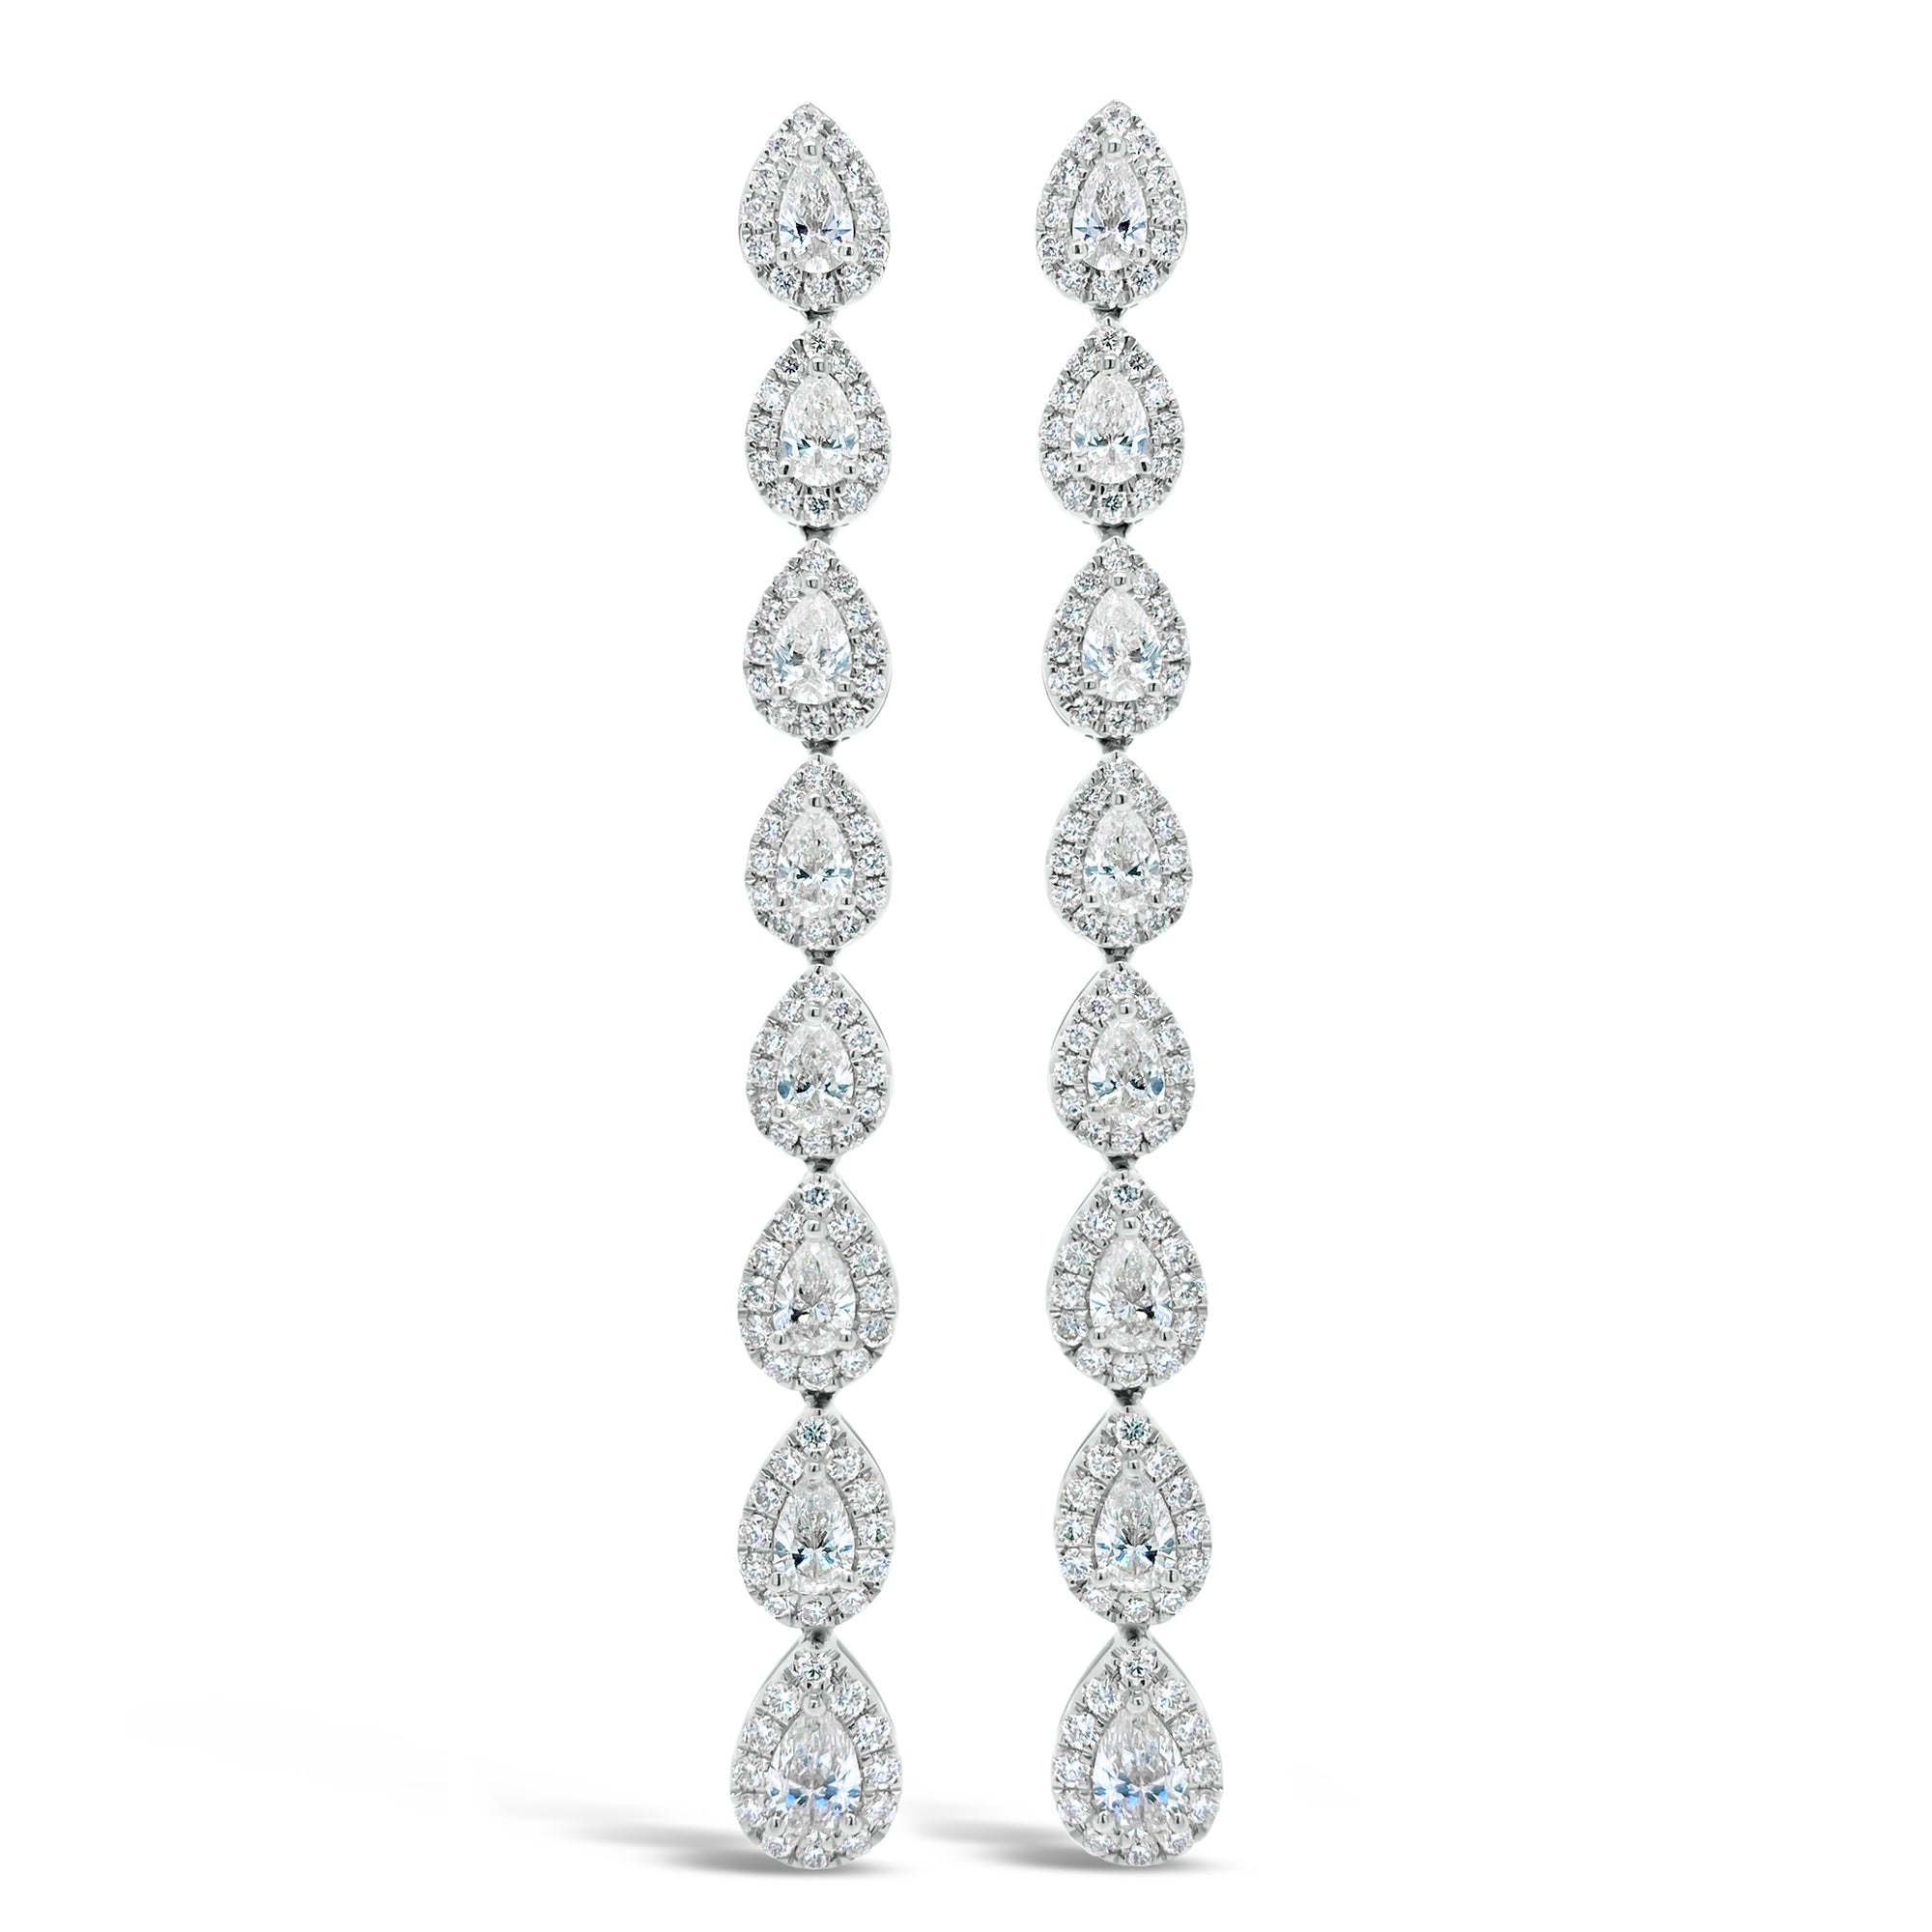 Diamond Teardrop Long Dangle Earrings  - 18K gold weighing 8.24 grams  - 192 round diamonds totaling 1.05 carats  - 16 pear-shaped diamonds totaling 1.85 carats